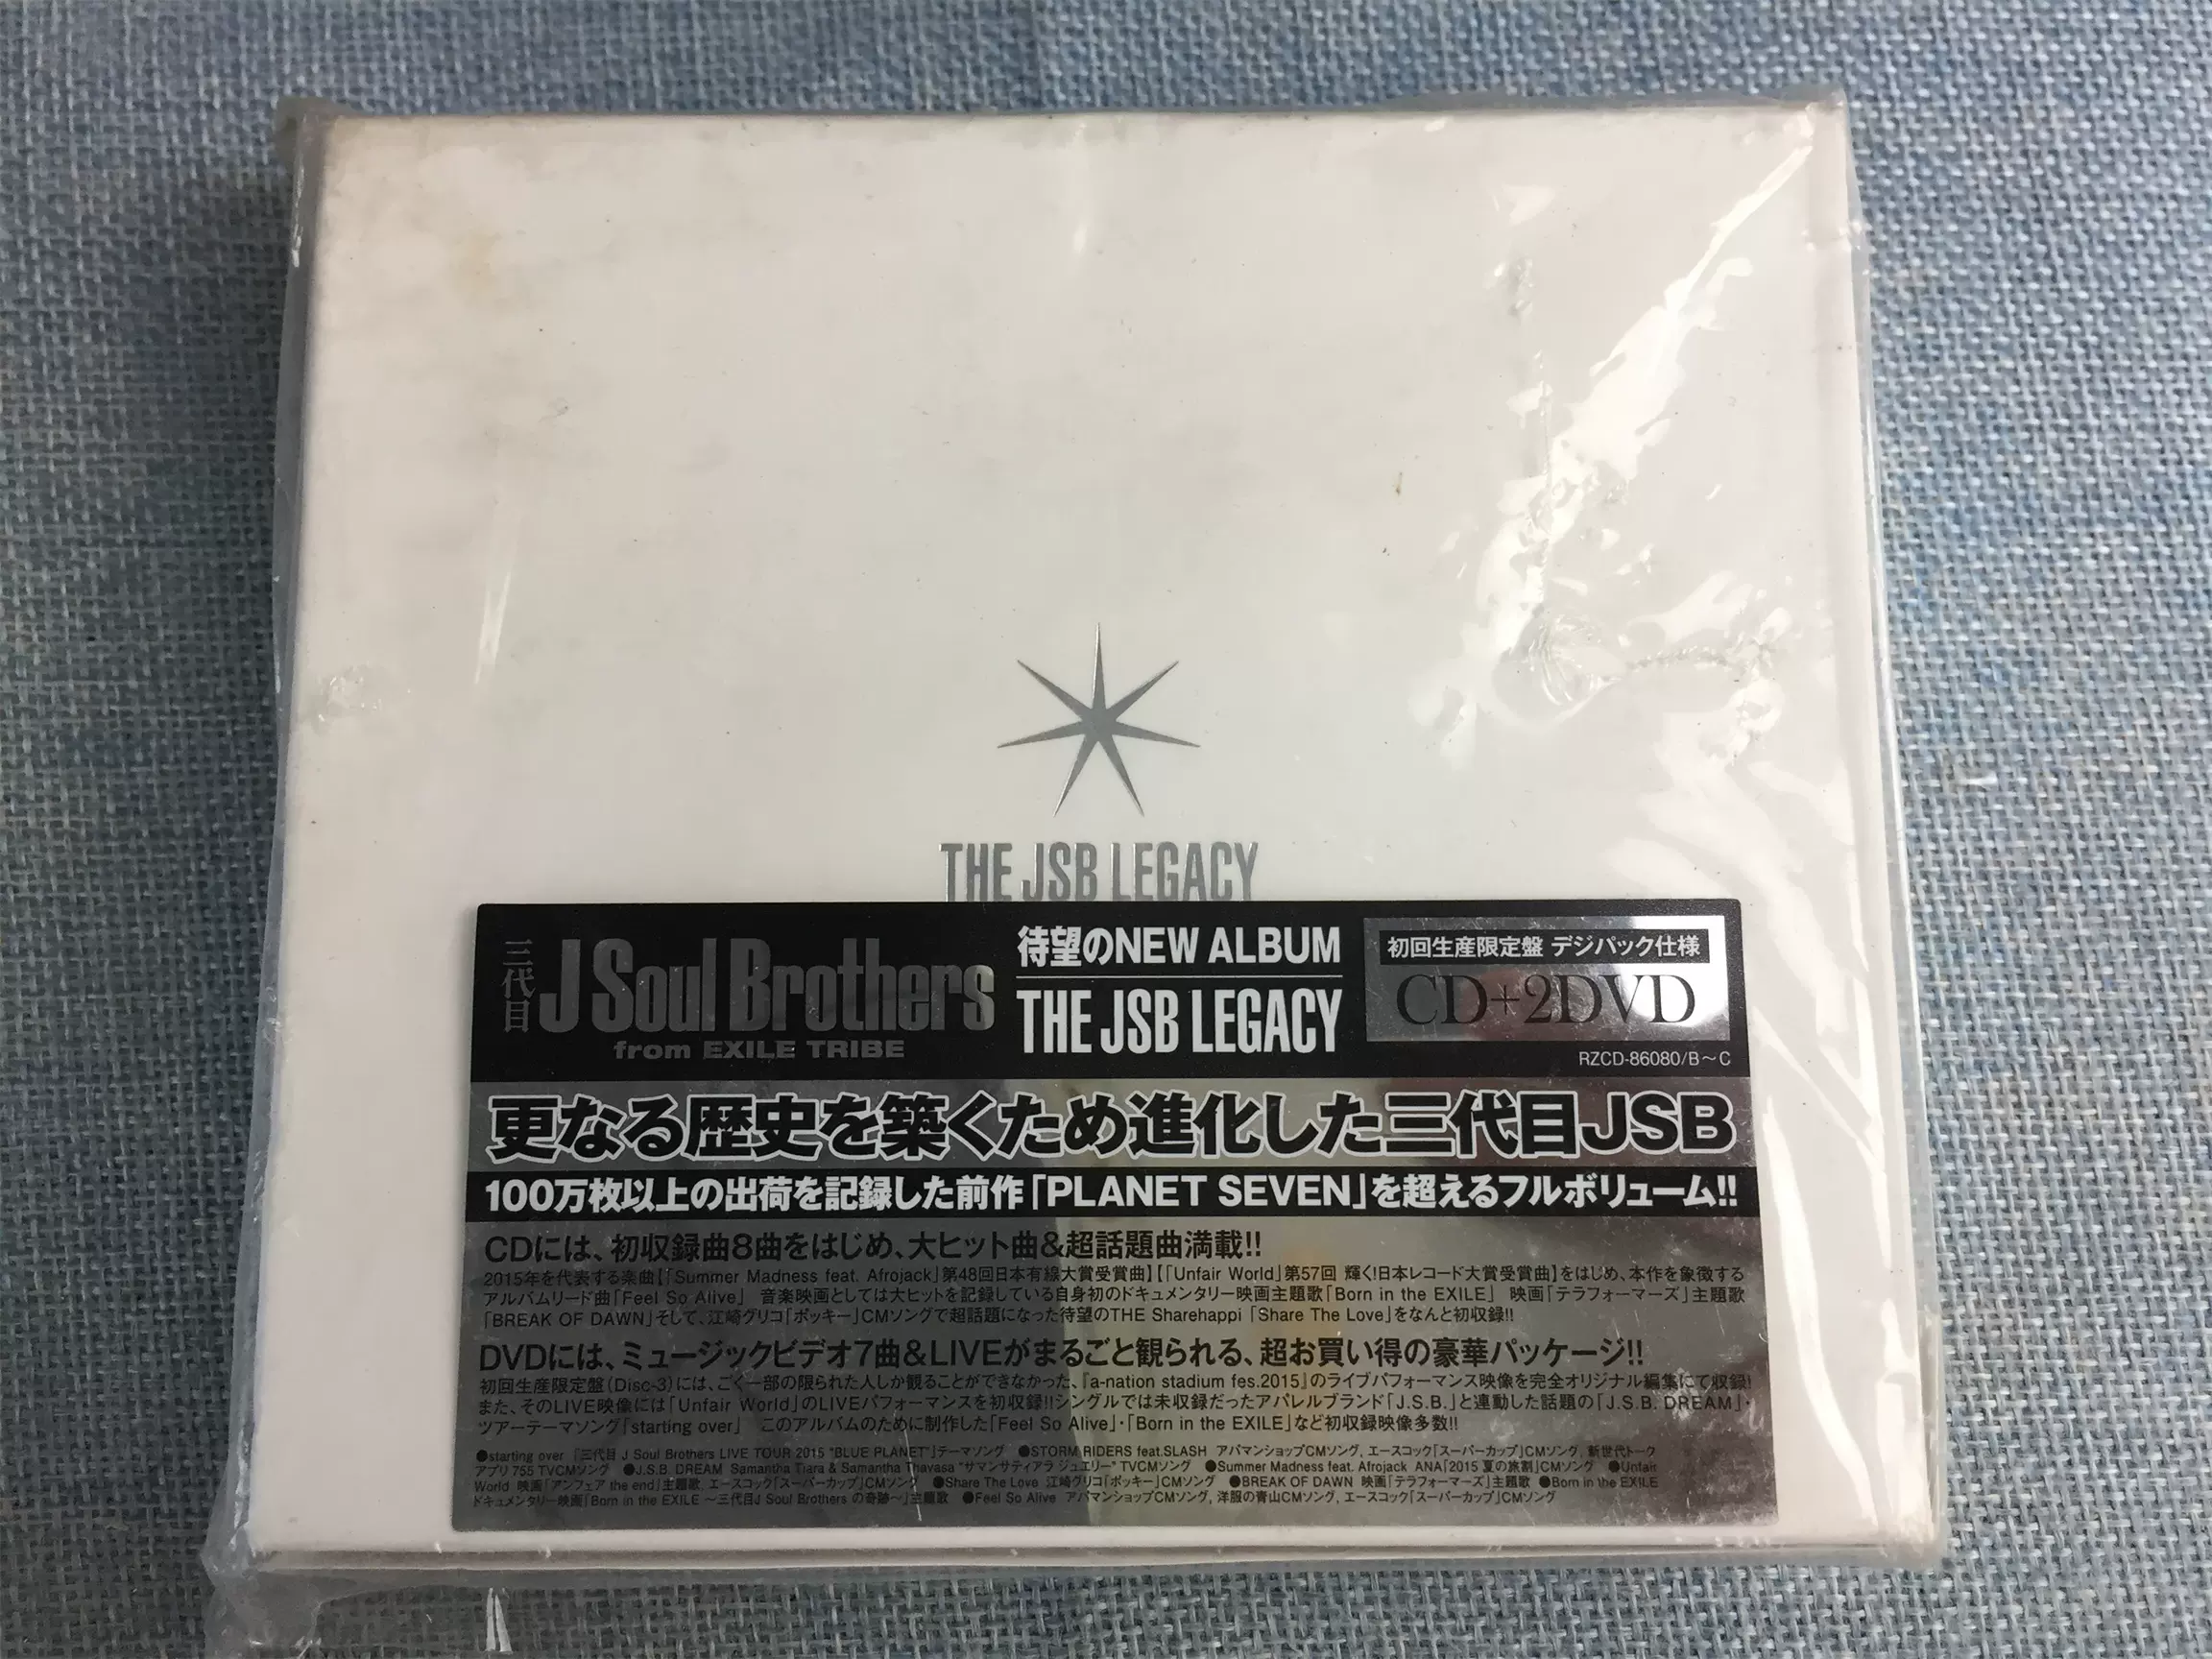 JP版拆封the jsb legacy j sould brothers三代目CD+2DVD行货大碟-Taobao